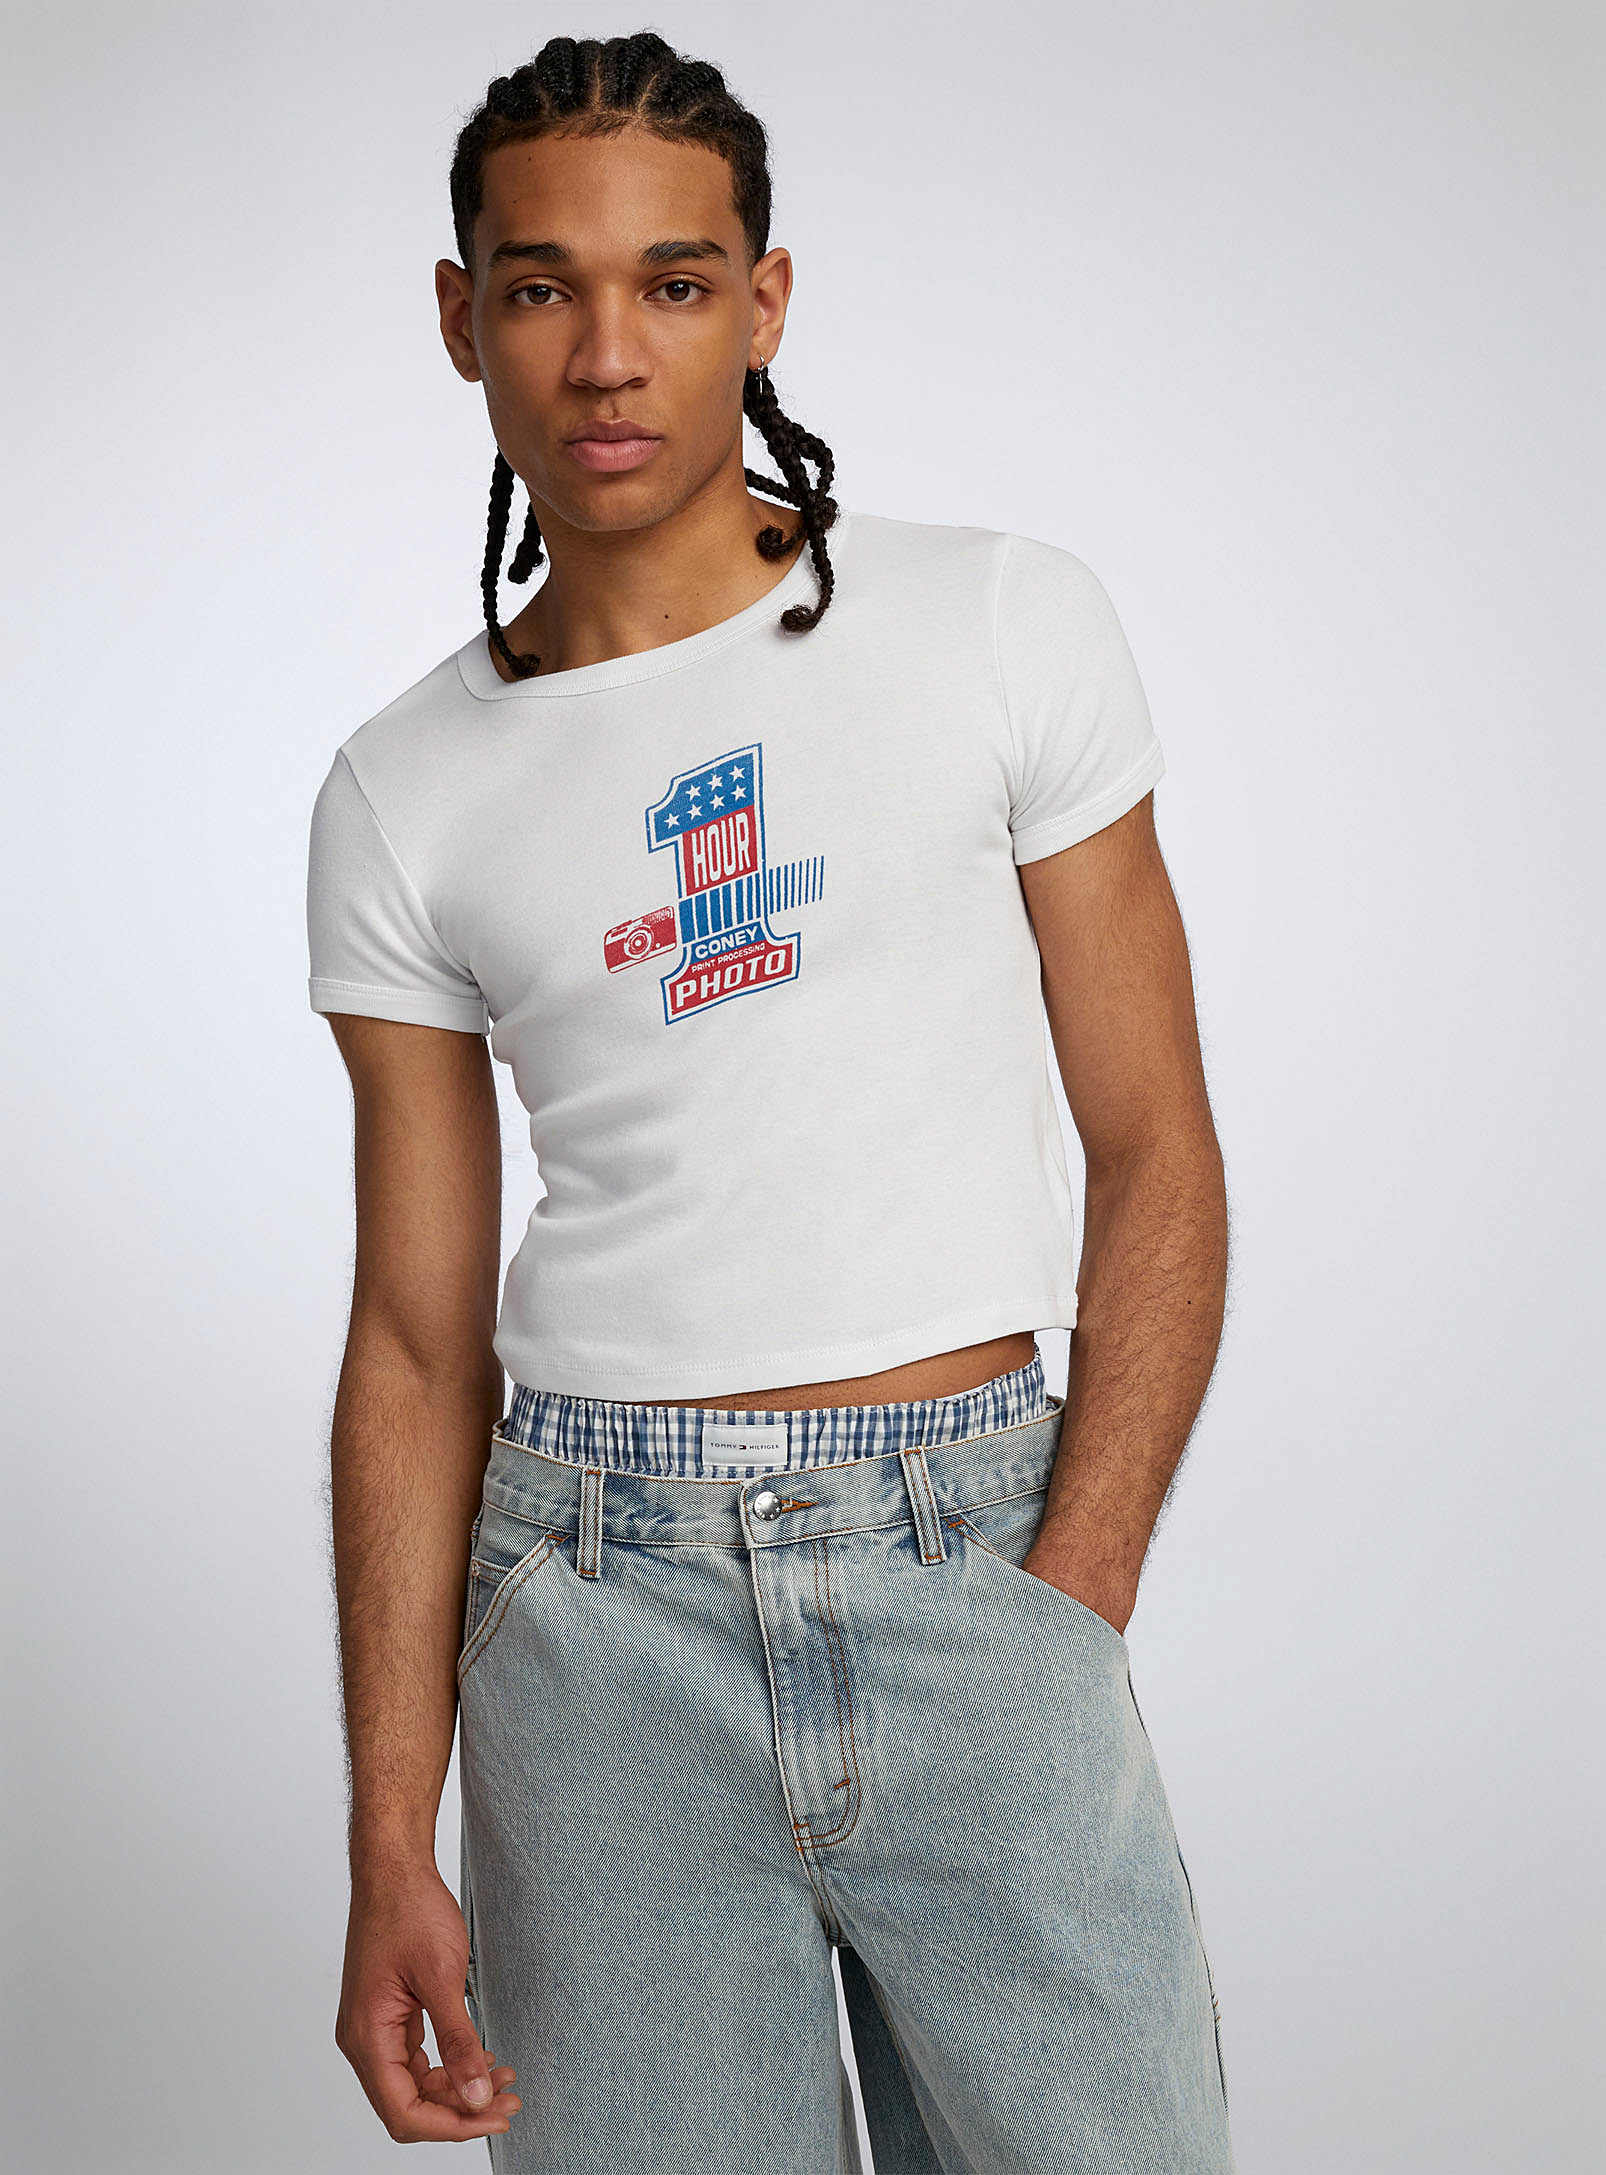 Coney Island Picnic - Le t-shirt mini 1 Hour Photo